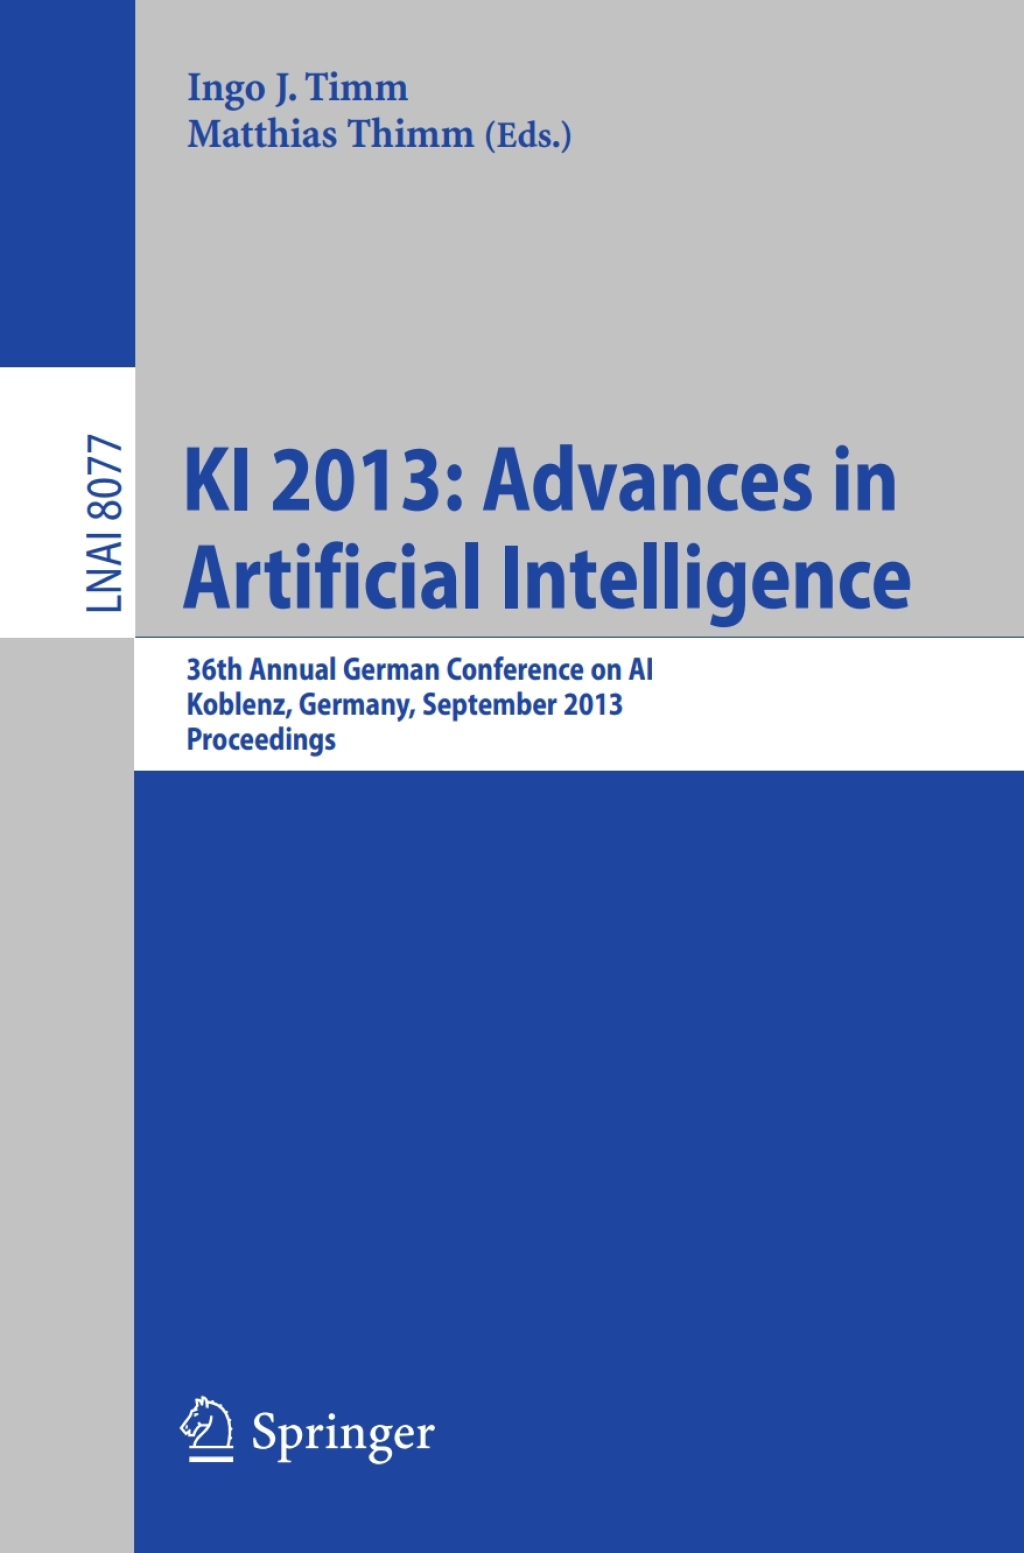 KI 2013: Advances in Artificial Intelligence (eBook) - Ingo J. Timm